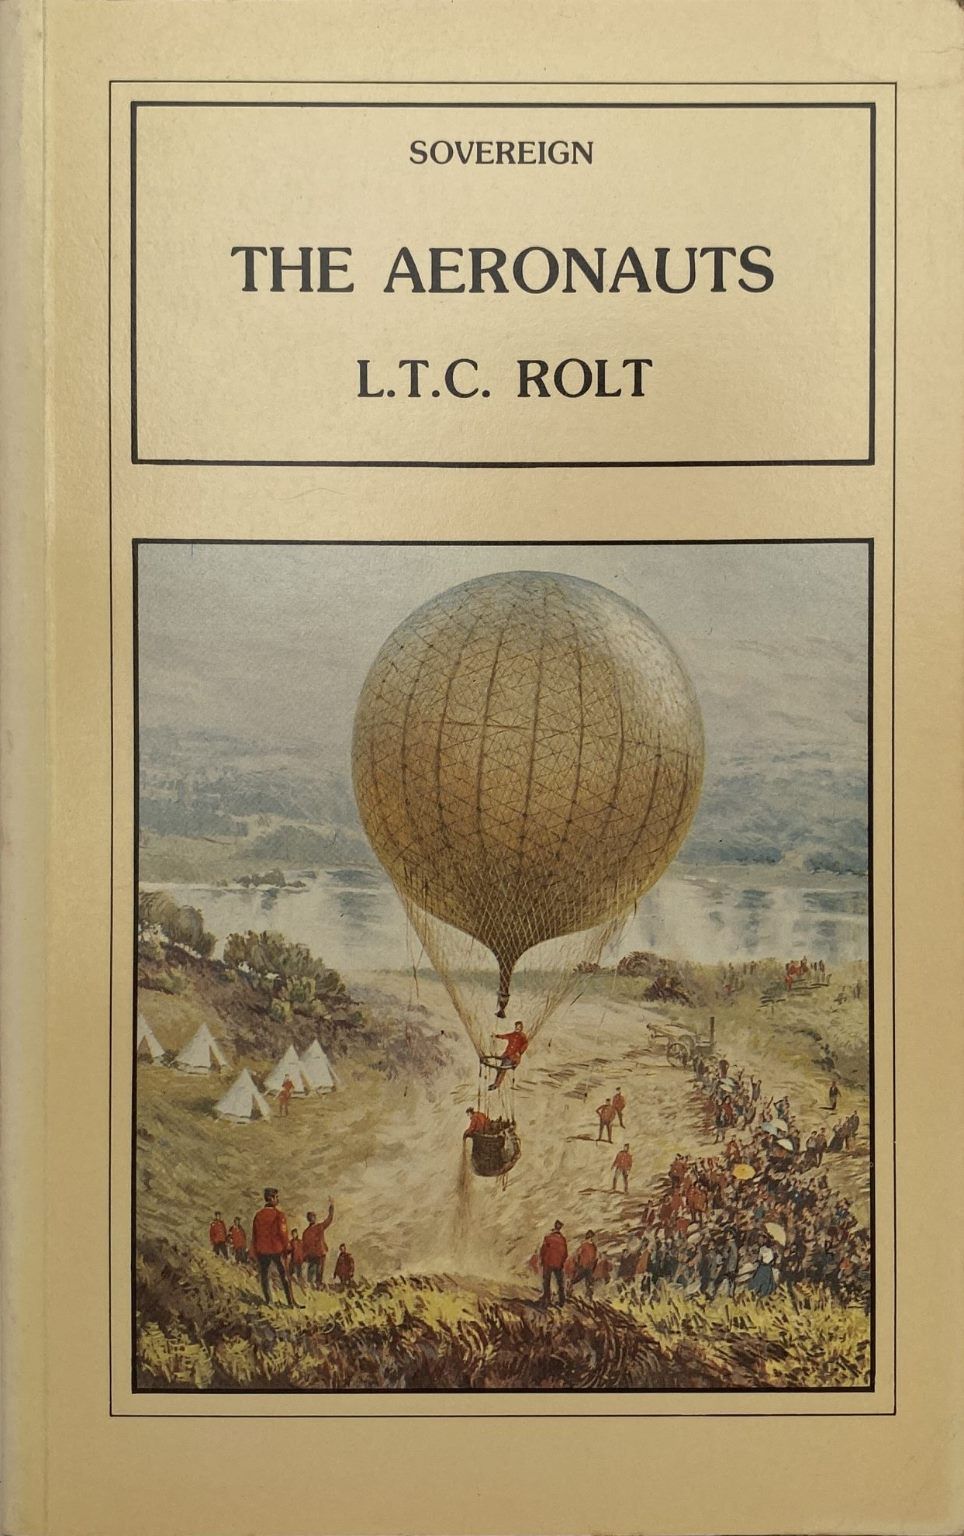 THE AERONAUTS: A History of Ballooning 1783-1903